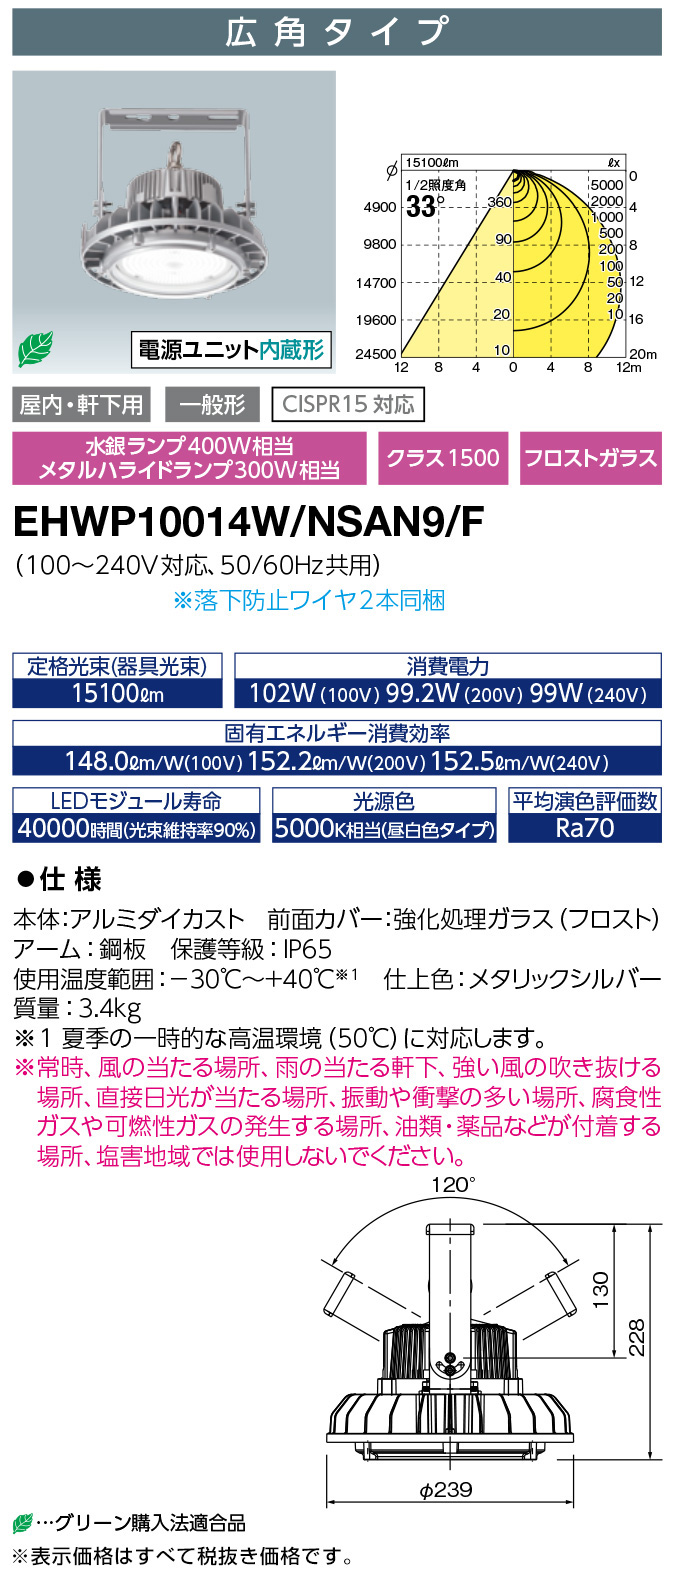 EHWP10014W/NSAN9/F